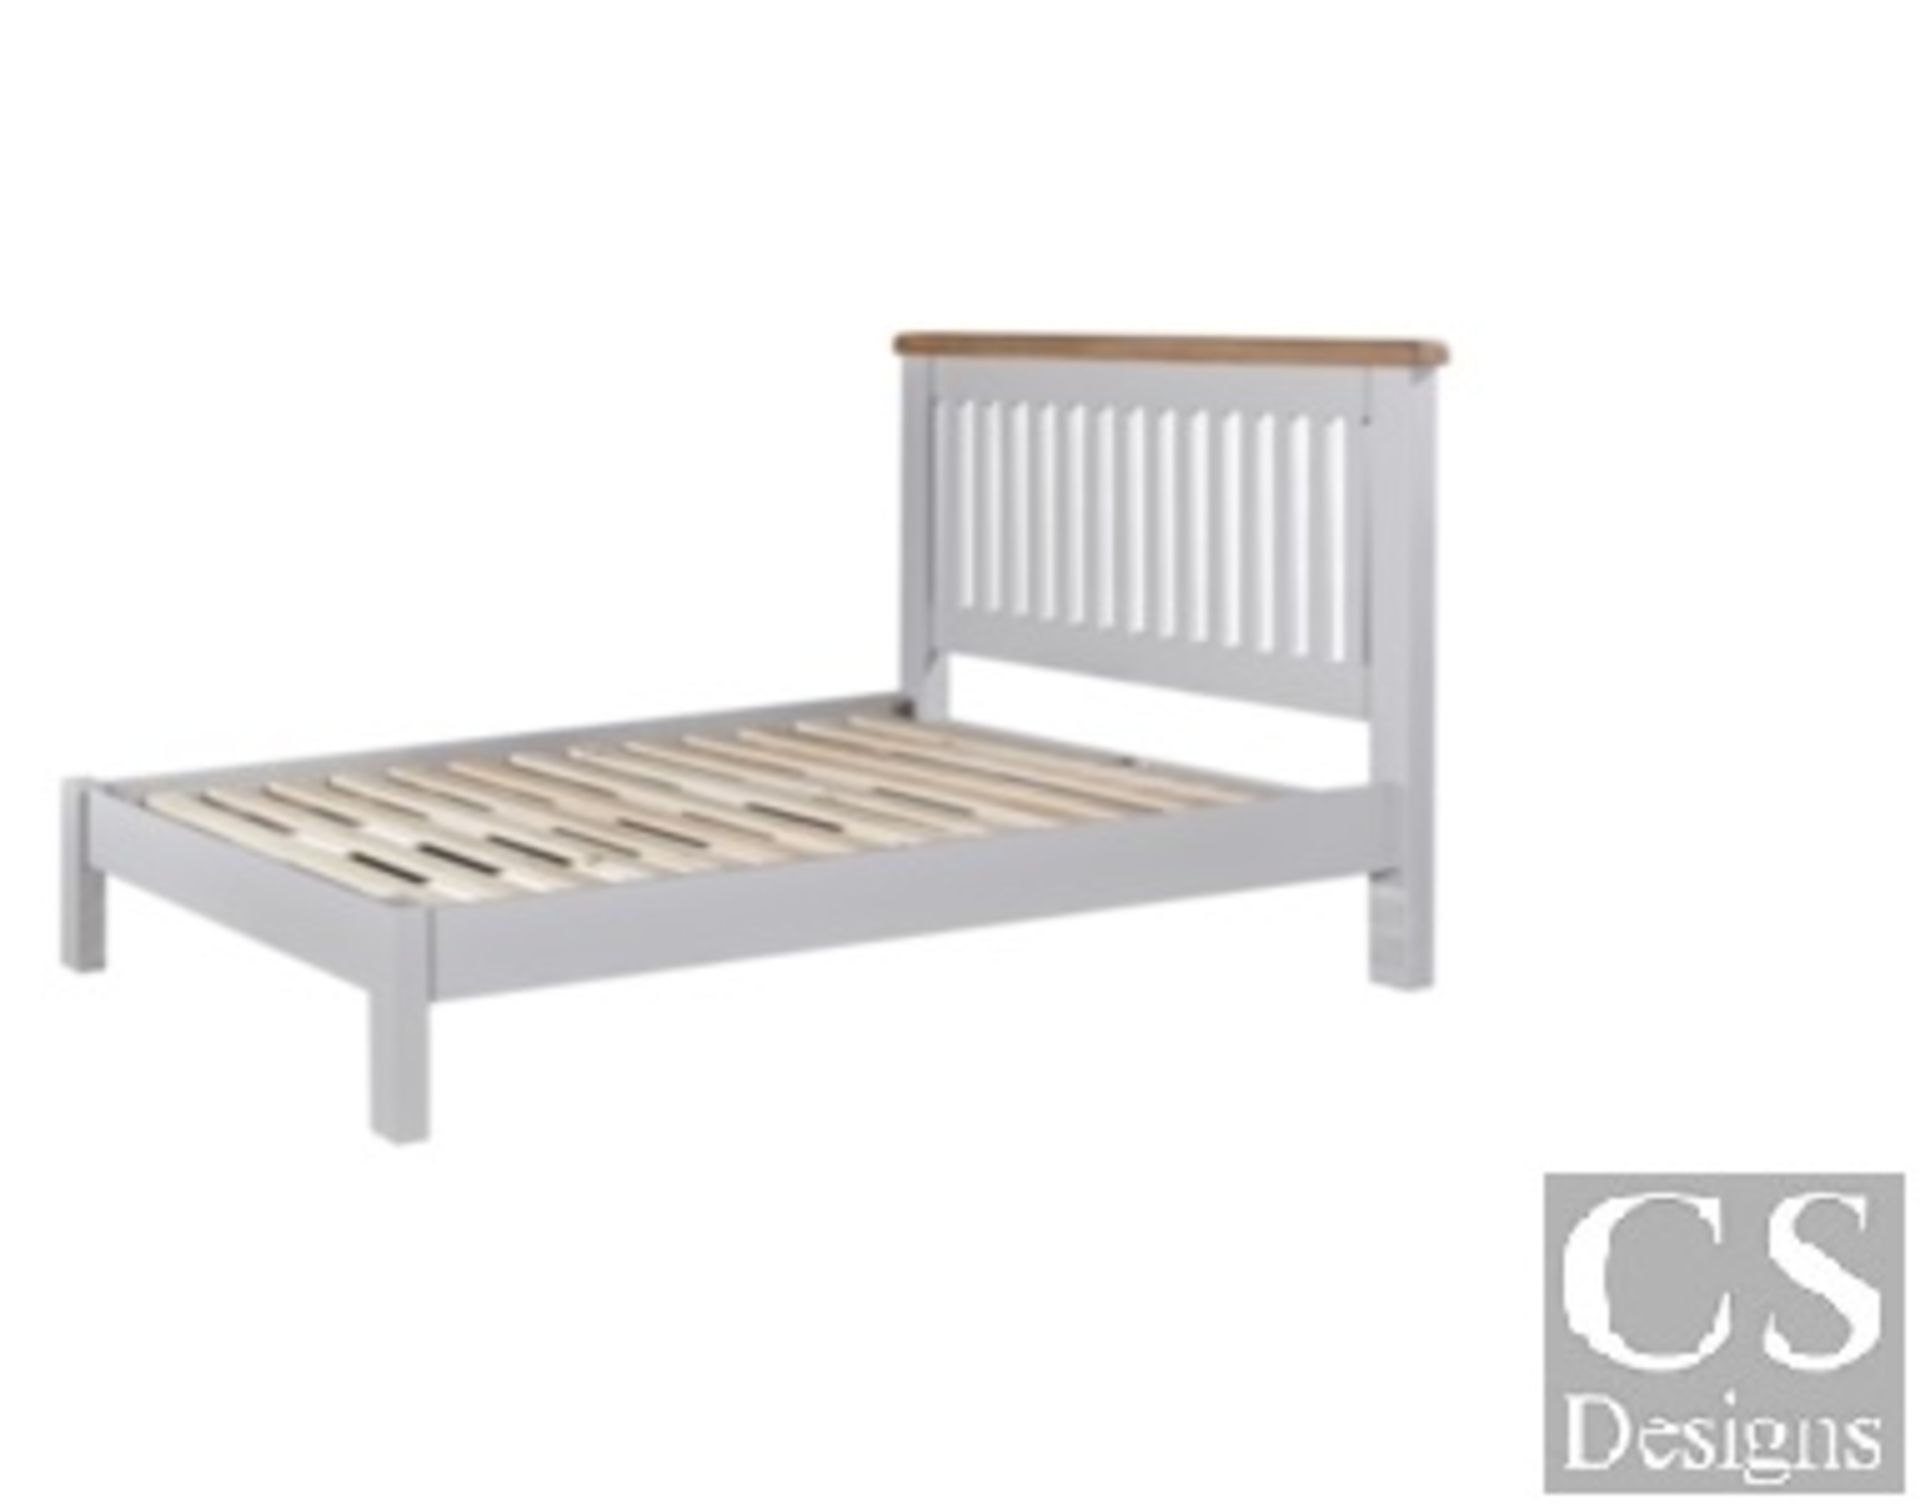 + VAT Brand New CS Designs "Windsor" Natural Oak Double Bed Frame - Brand New Stunning Quality - - Image 3 of 3